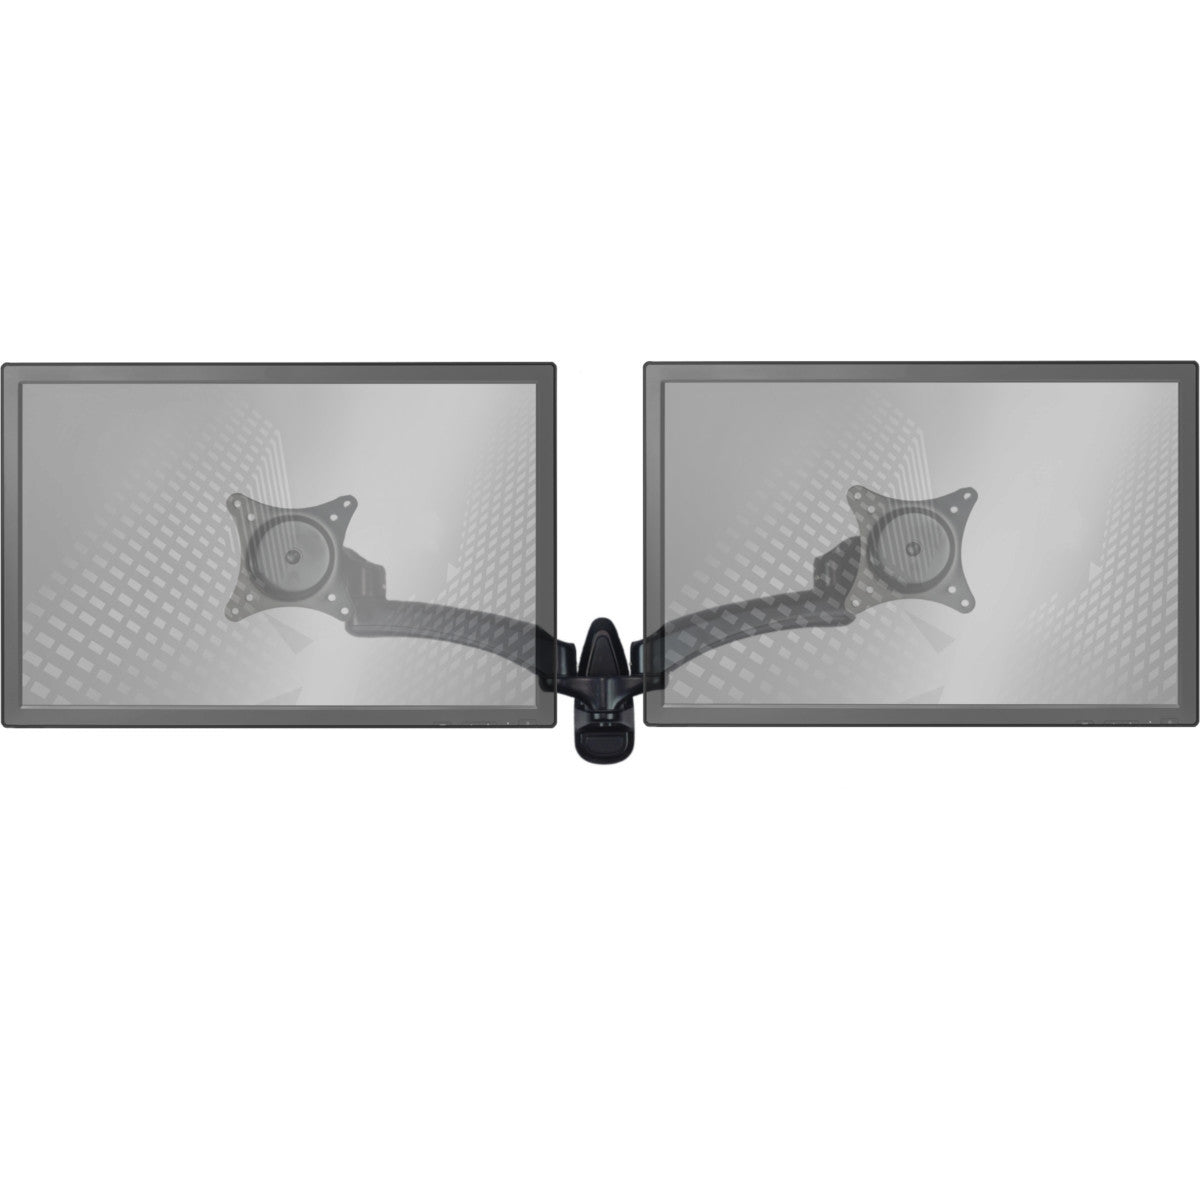 Wall Mount Monitor Arm: Standard Dual Screen Black